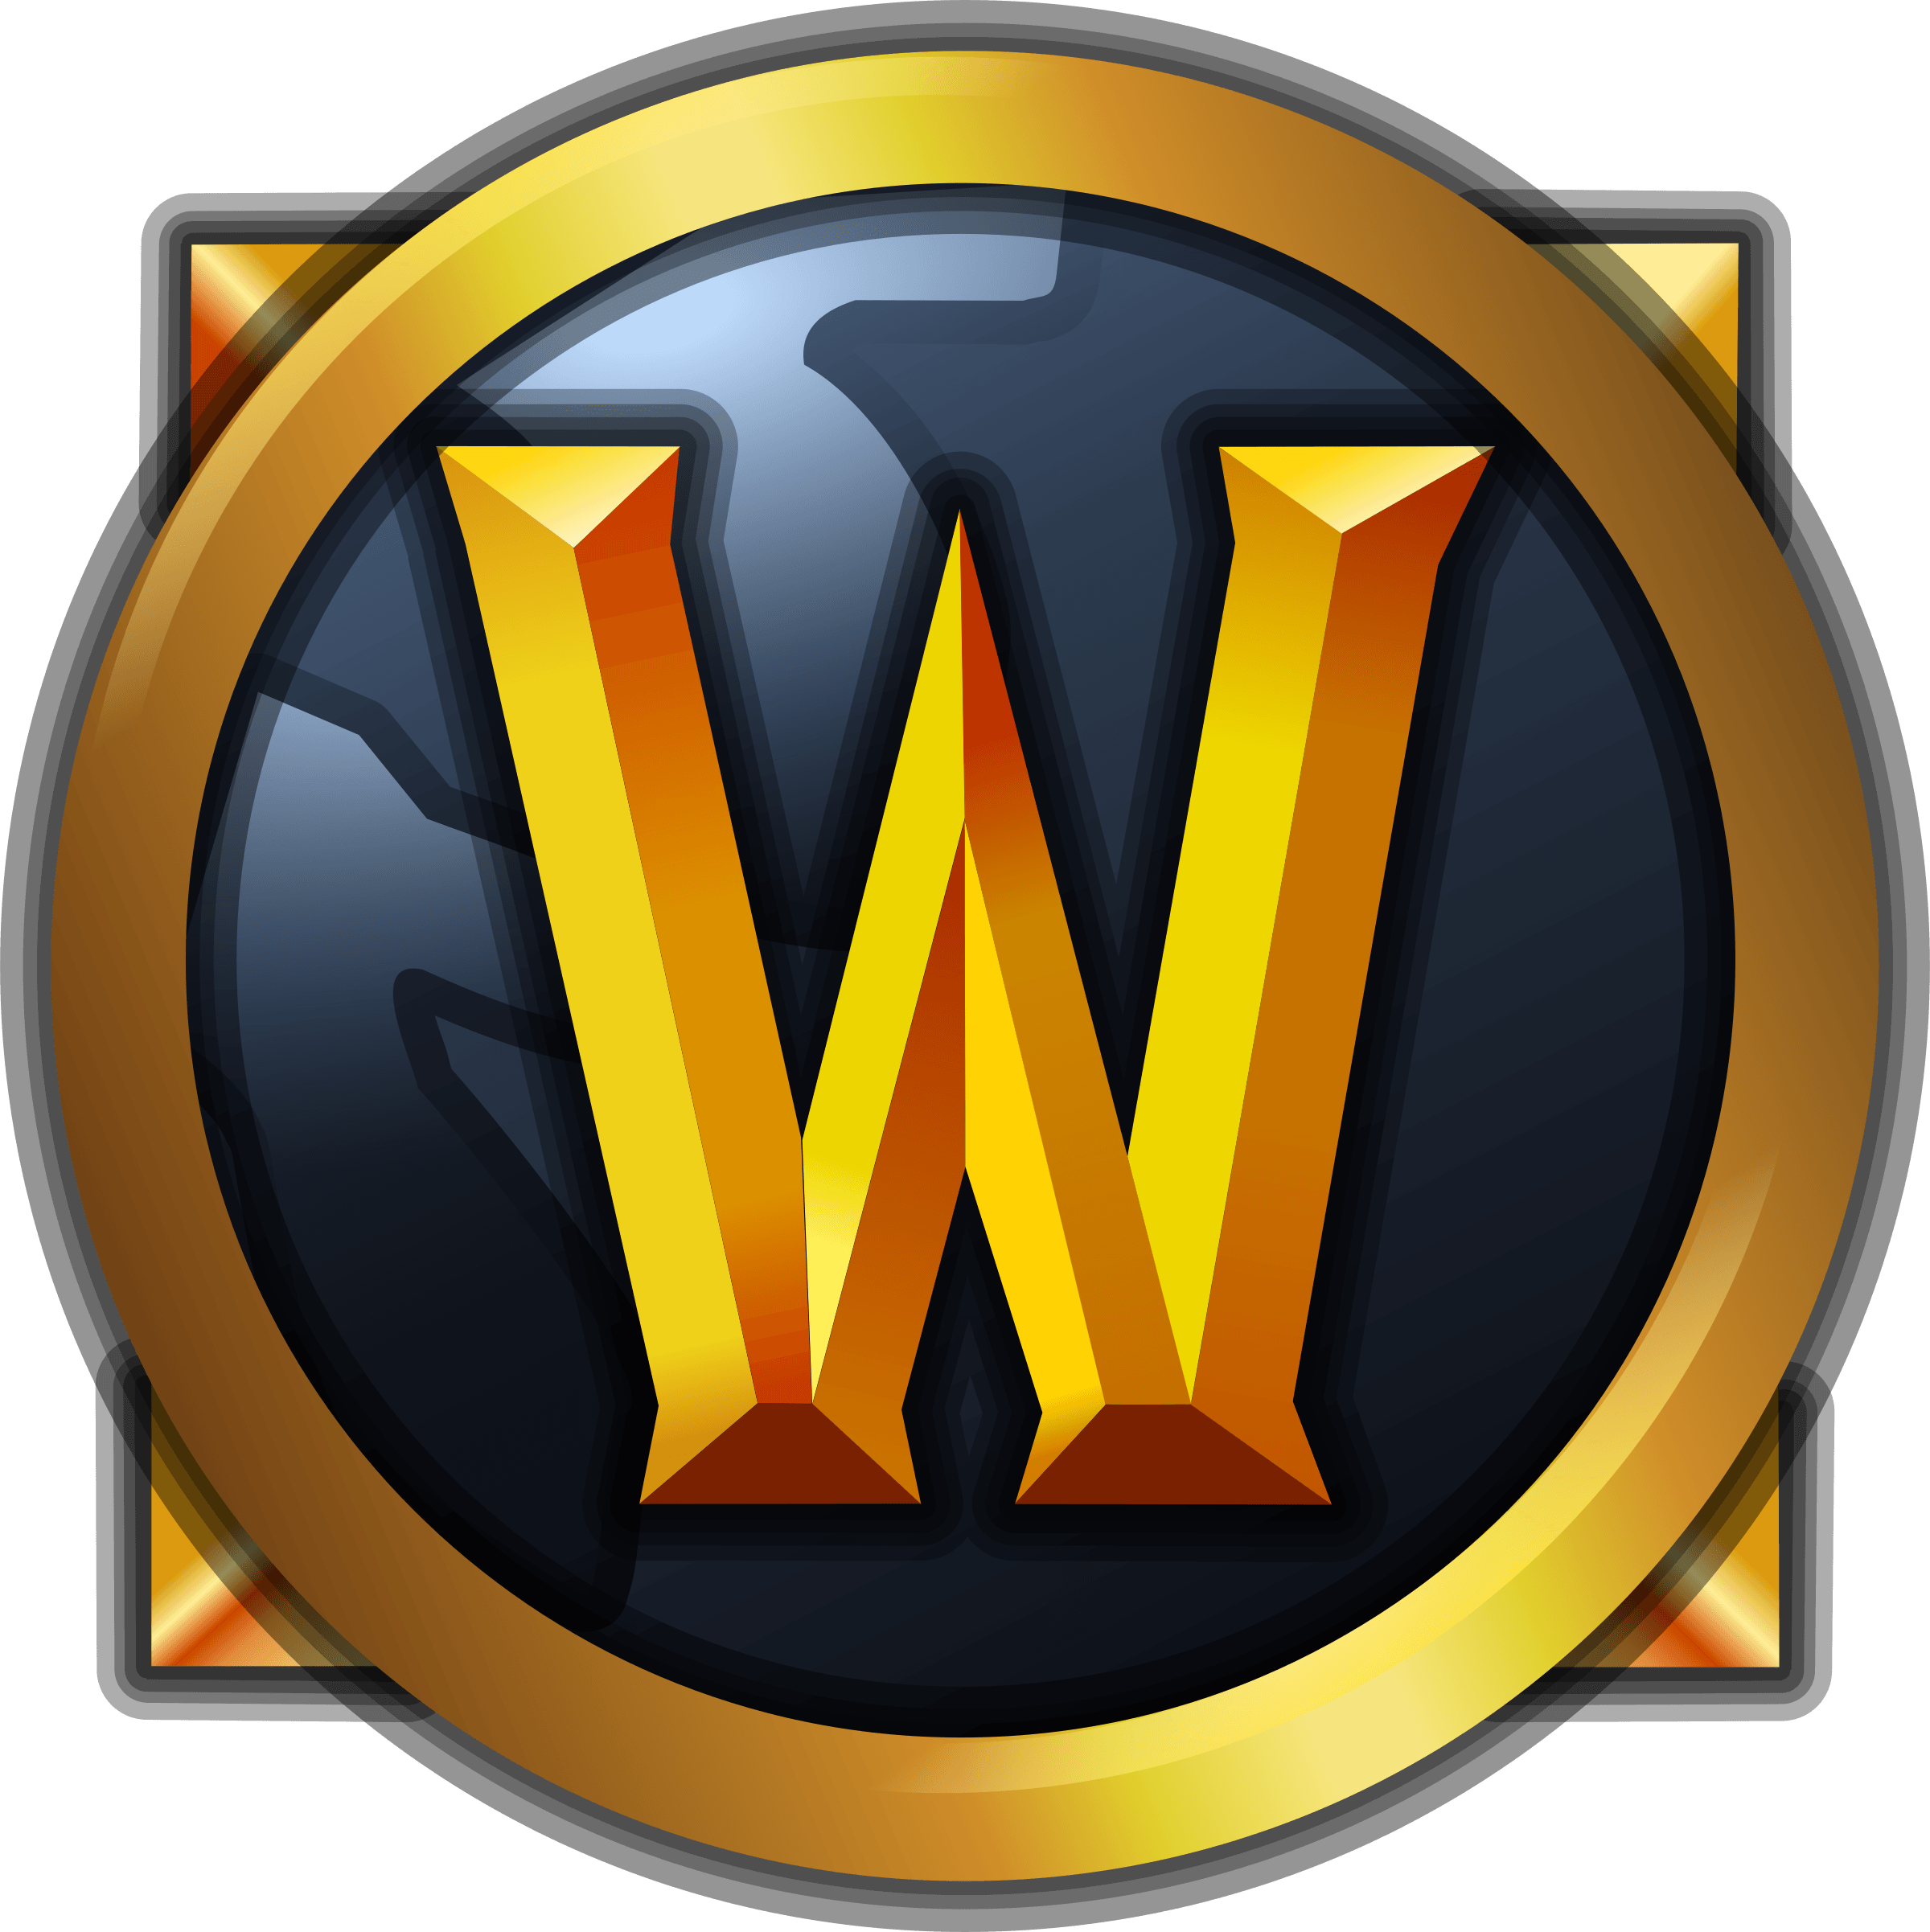 WoW Logo - World of Warcraft Logo PNG Transparent & SVG Vector - Freebie Supply